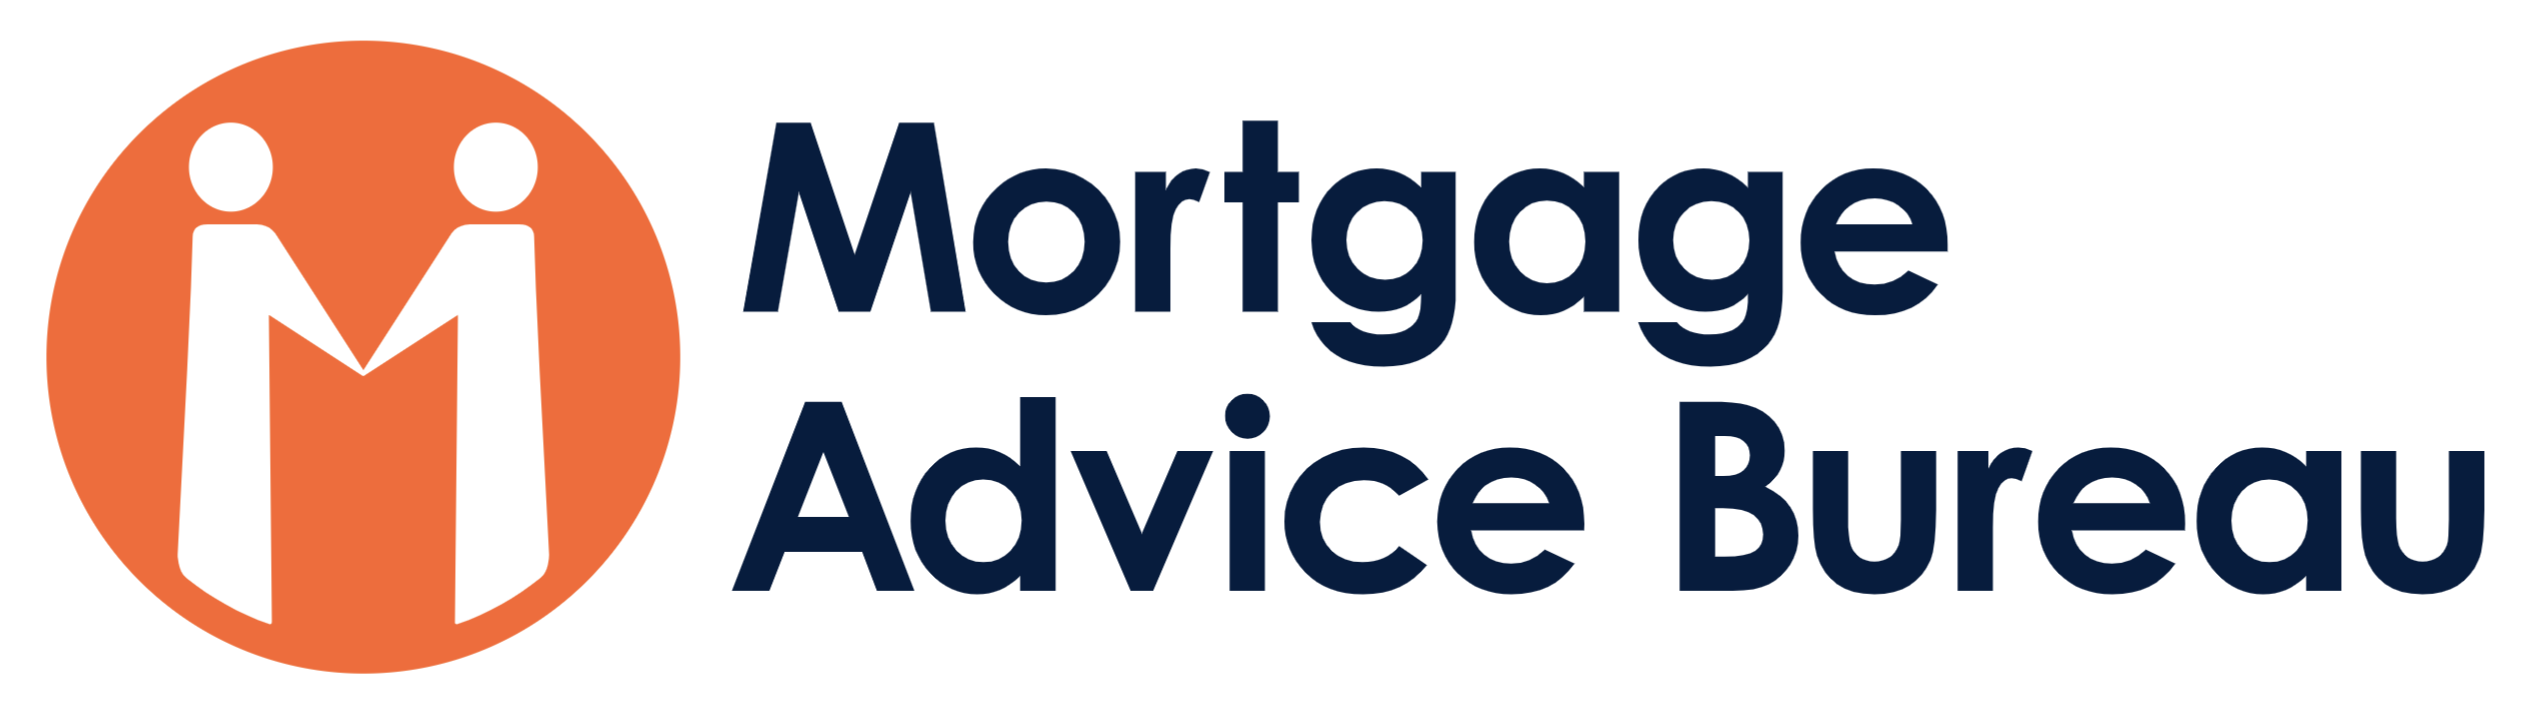 Mortgage Advice Bureau - McCleary's Broker Calculator